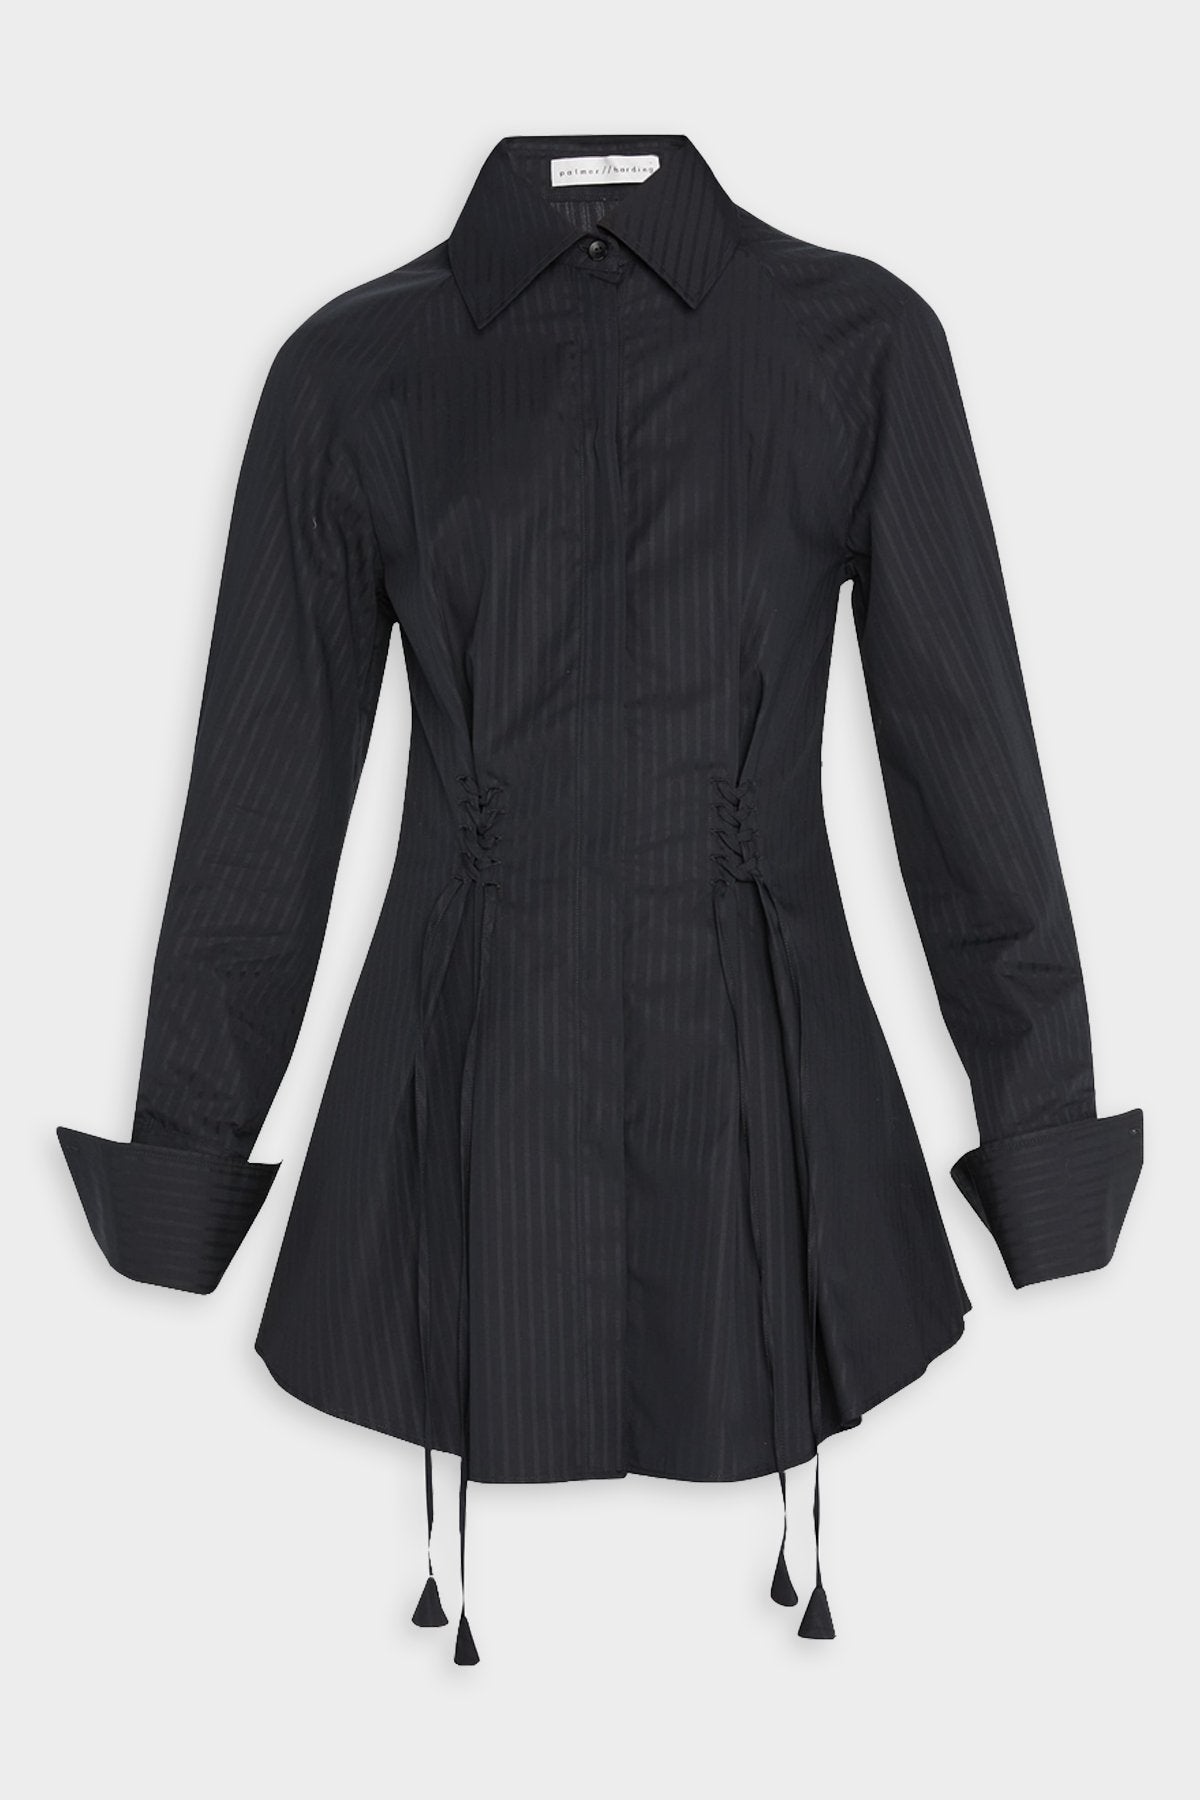 Sutured Fitted Shirt in Black Satin Stripe - shop-olivia.com